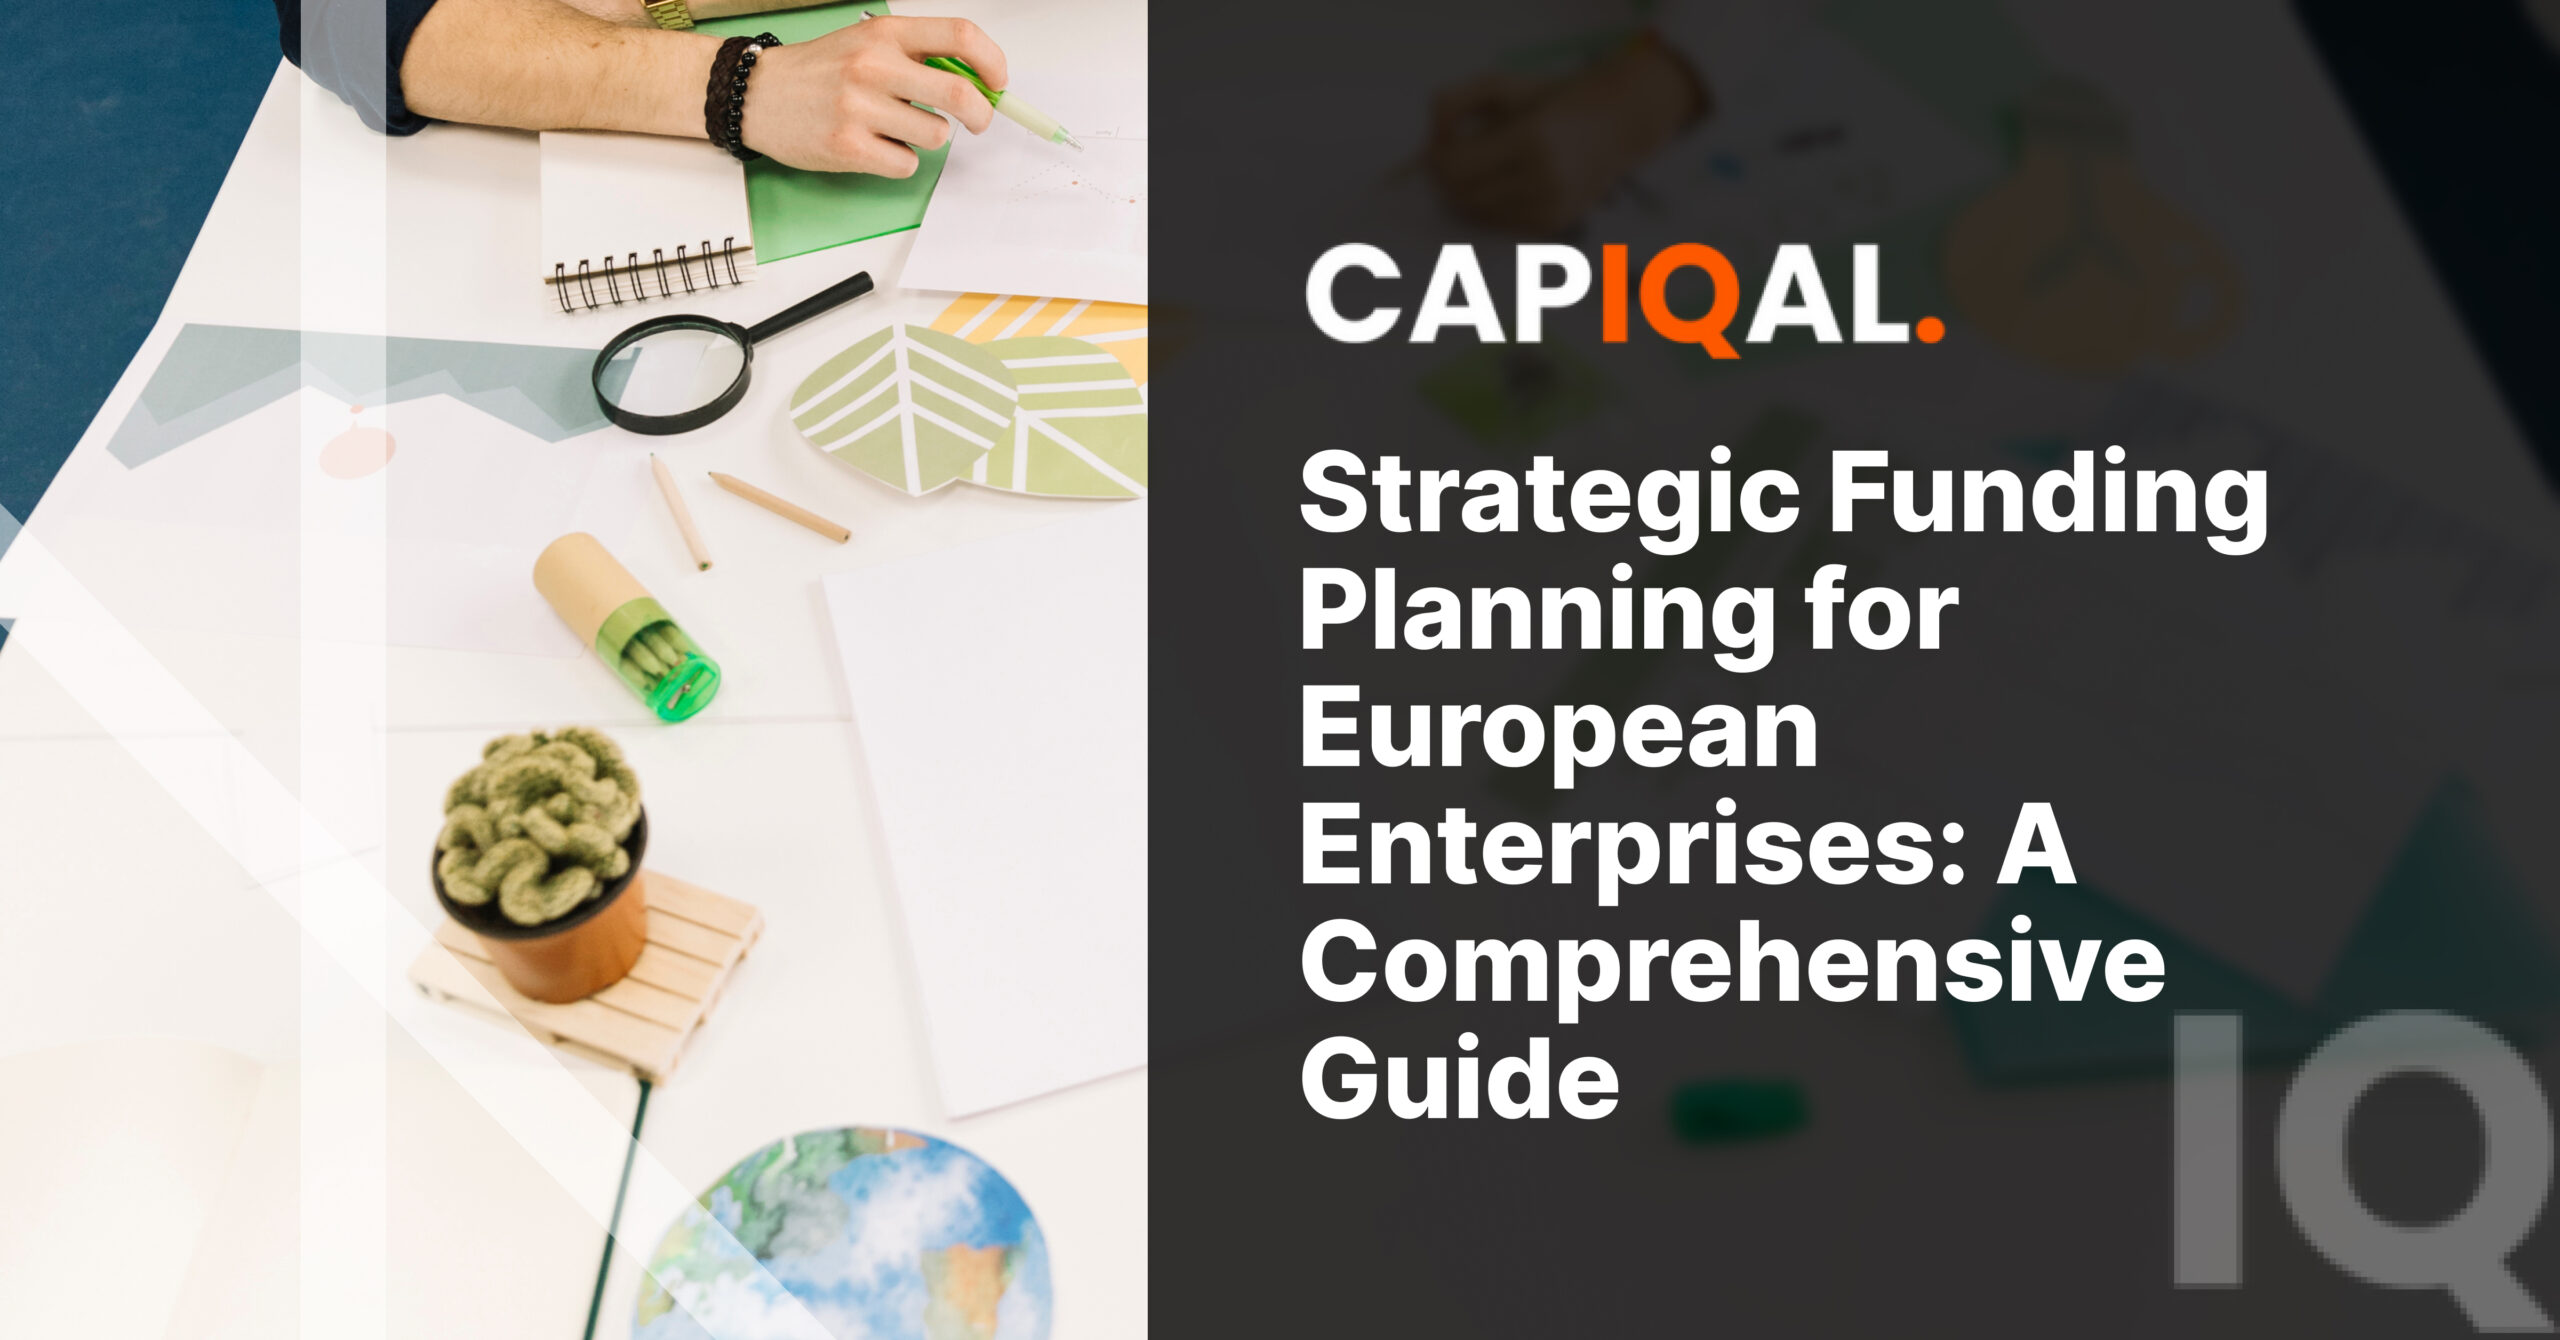  Strategic Funding Planning for European Enterprises: A Comprehensive Guide